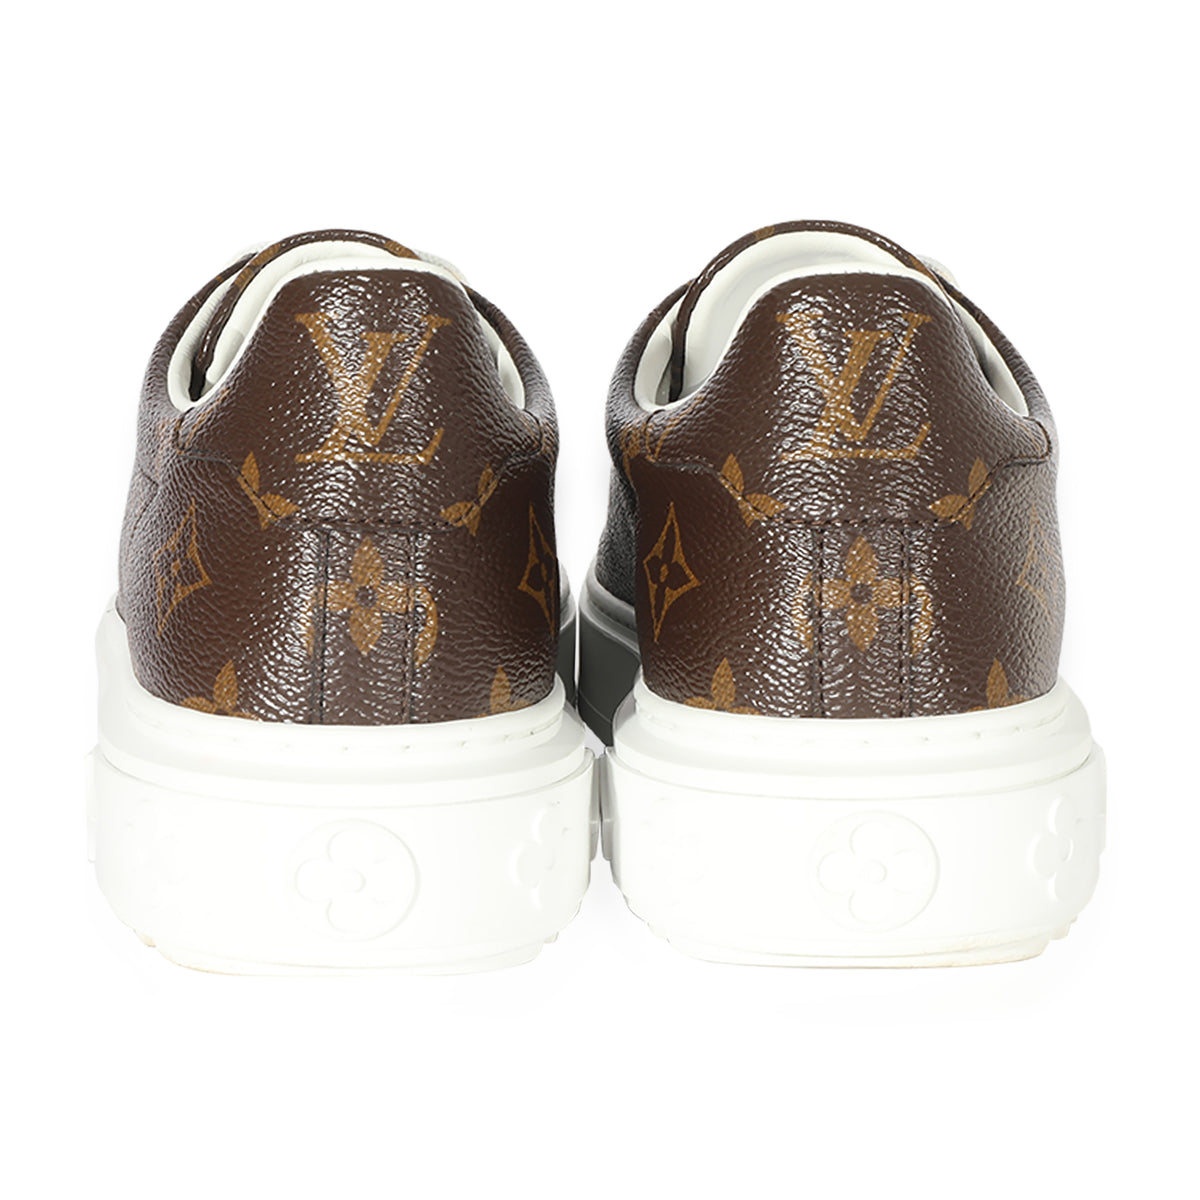 Louis Vuitton Time Out Sneaker White. Size 34.0